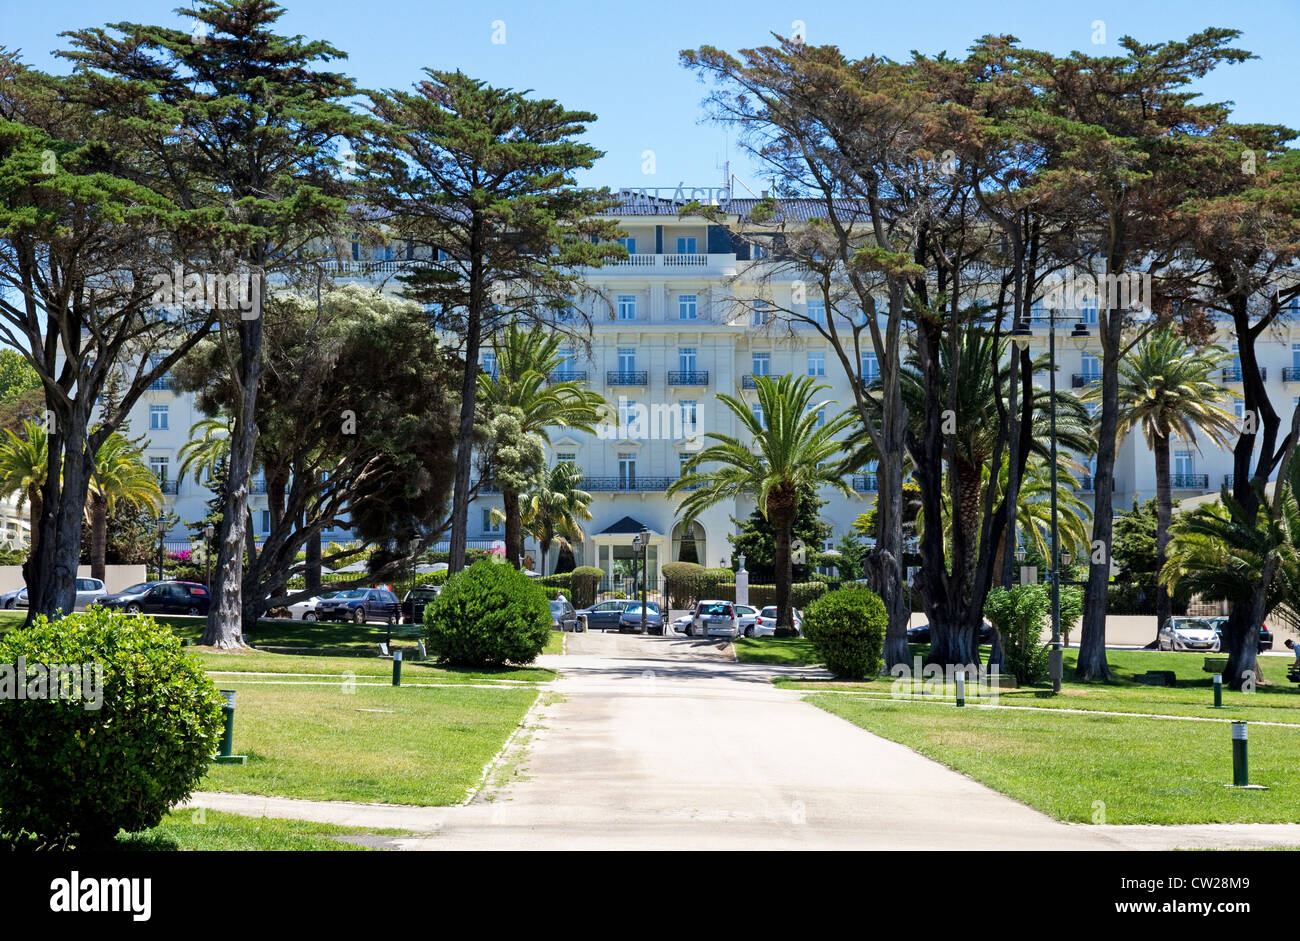 Hotel palacio estoril hi-res stock photography and images - Alamy